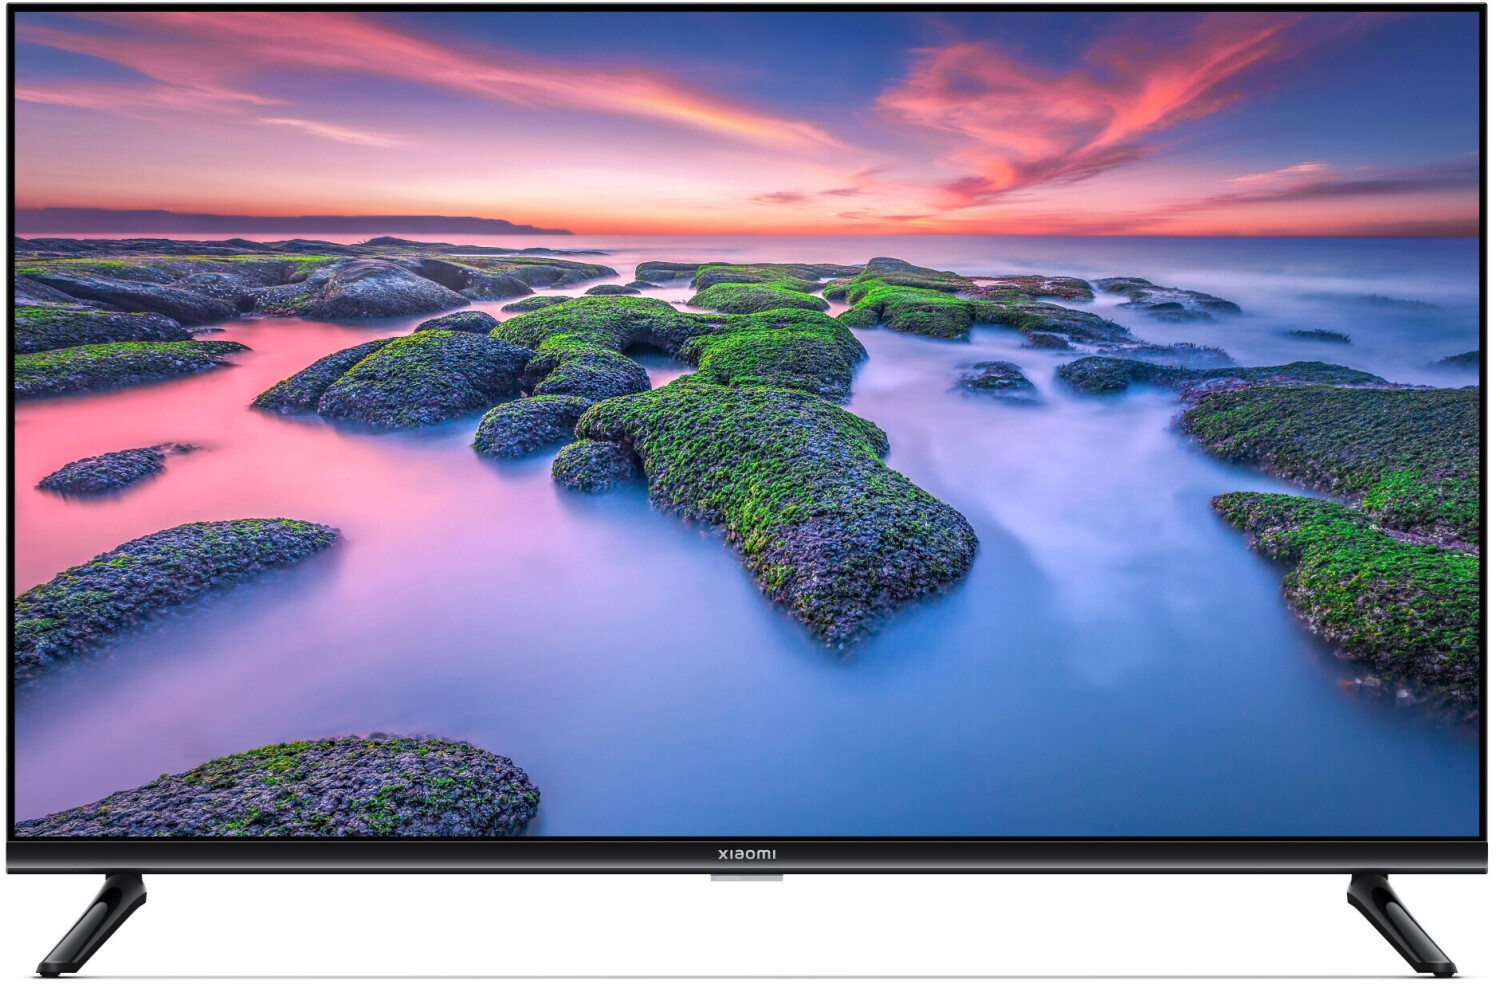 Televisor Xiaomi TV A2 32'/ HD/ Smart TV/ WiFi